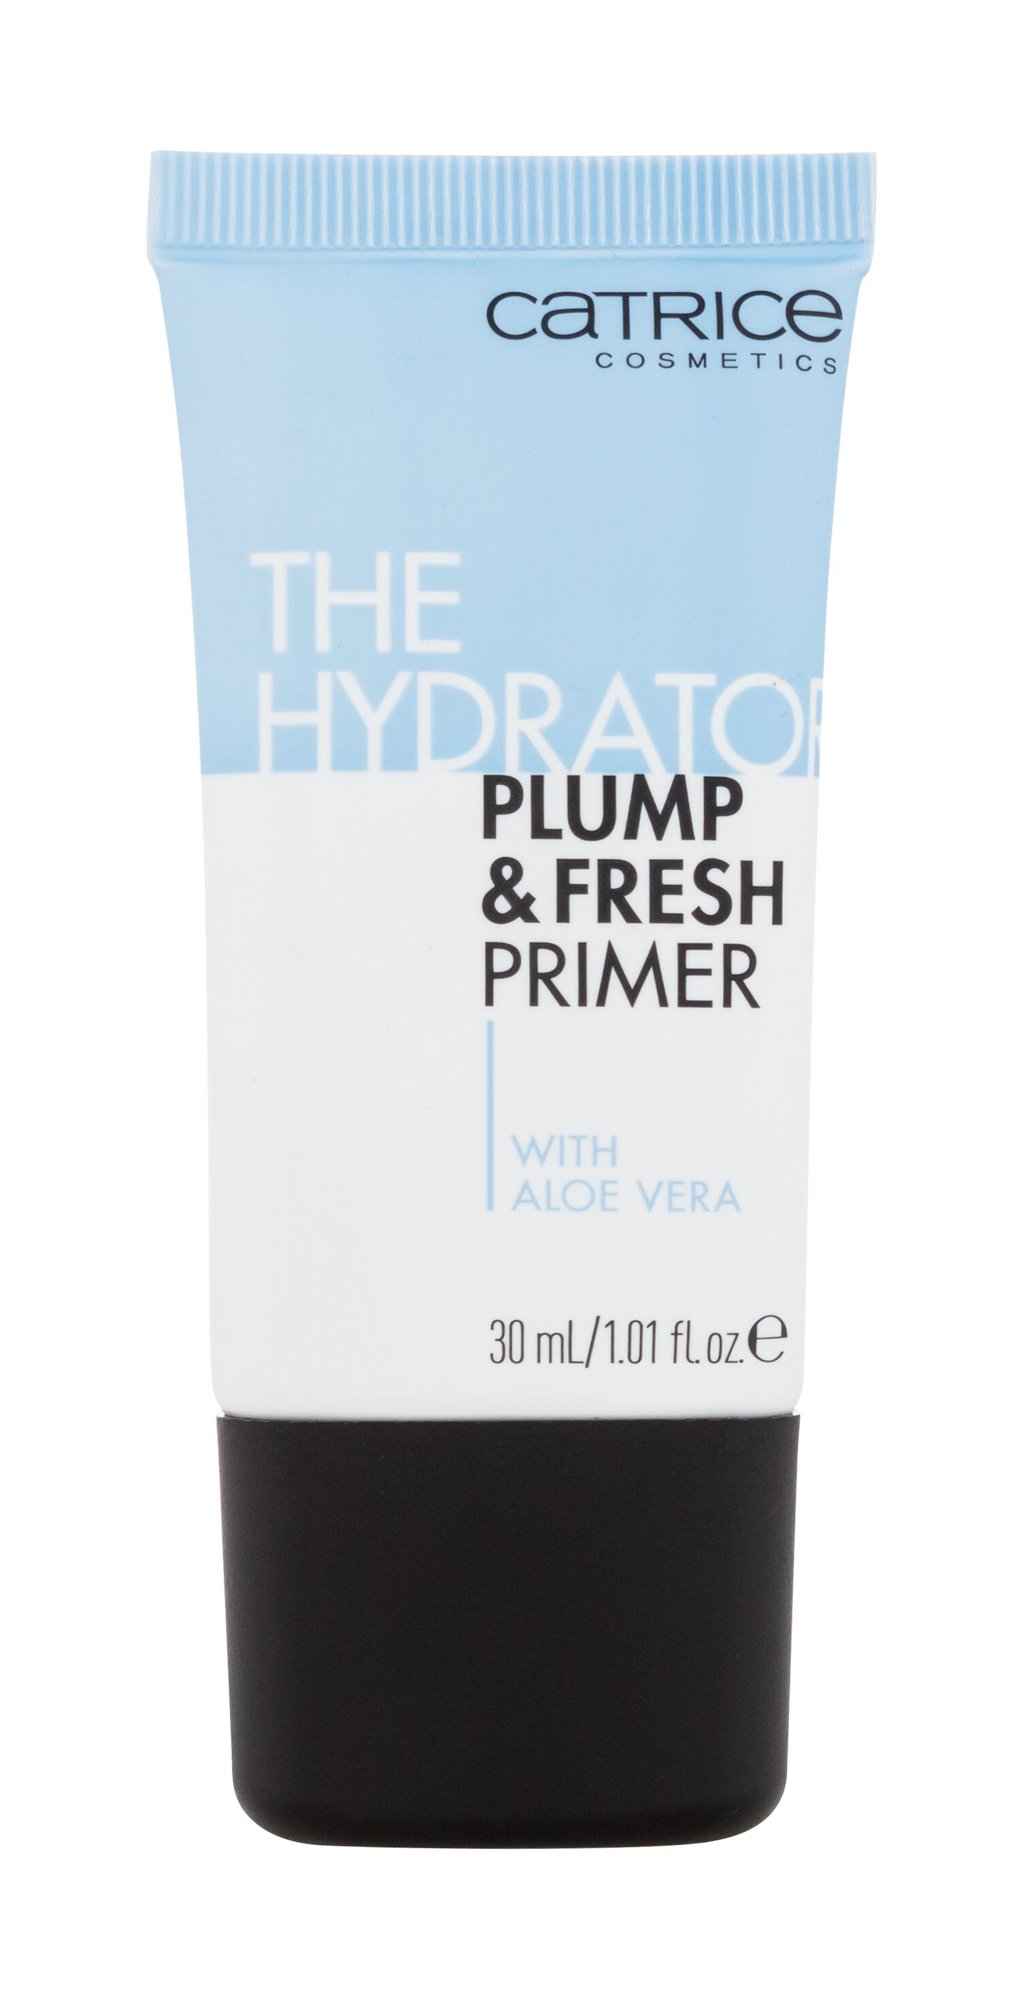 Catrice Plump & Fresh The Hydrator primeris